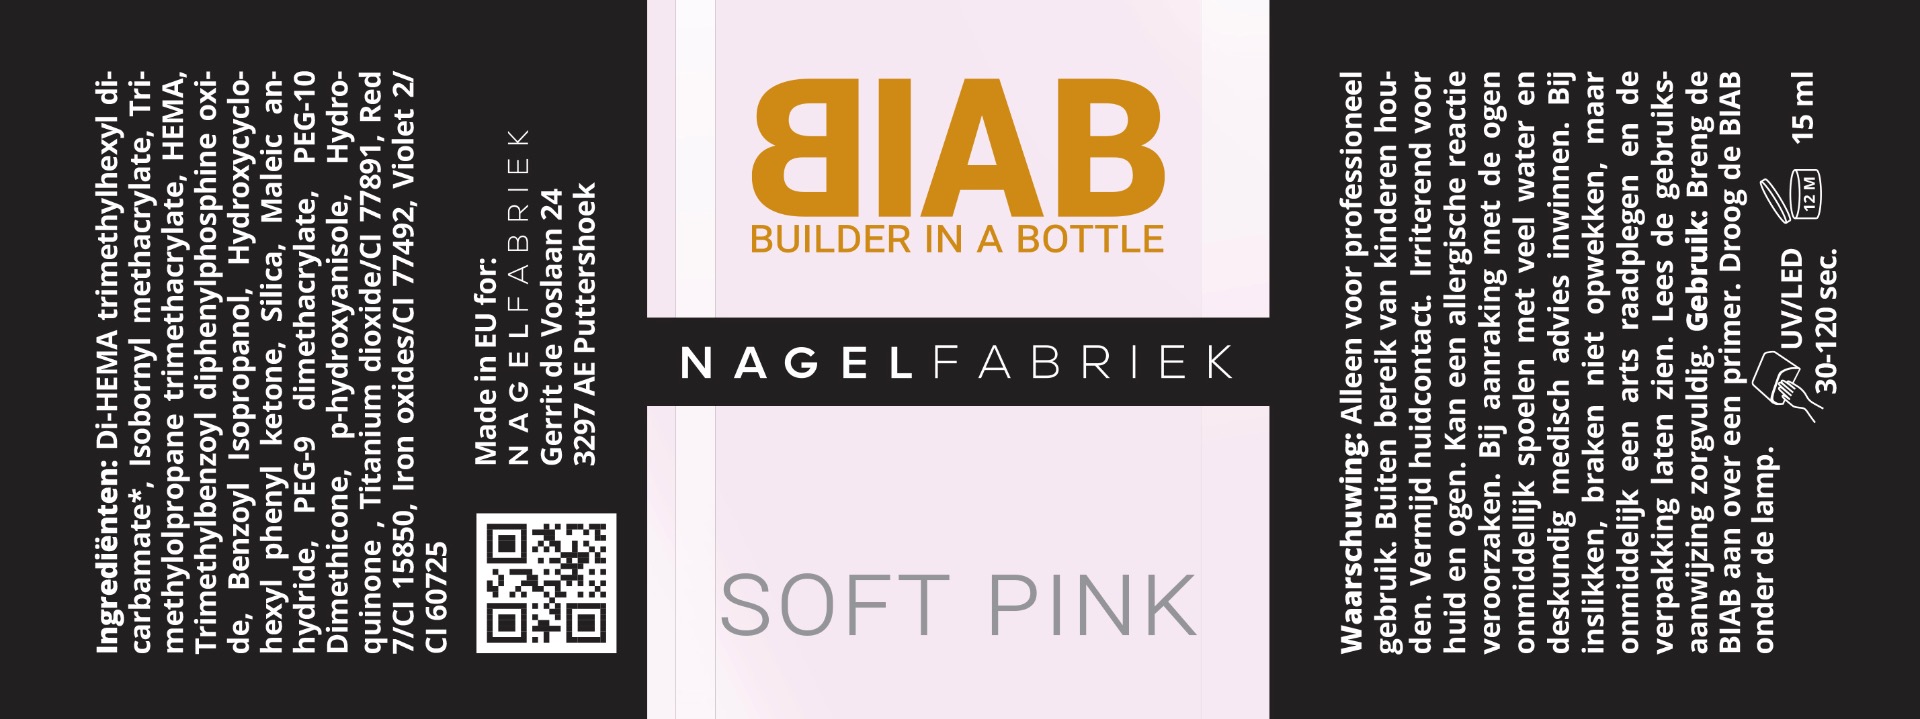 Label Builder In a Bottle Soft Pink - BIAB